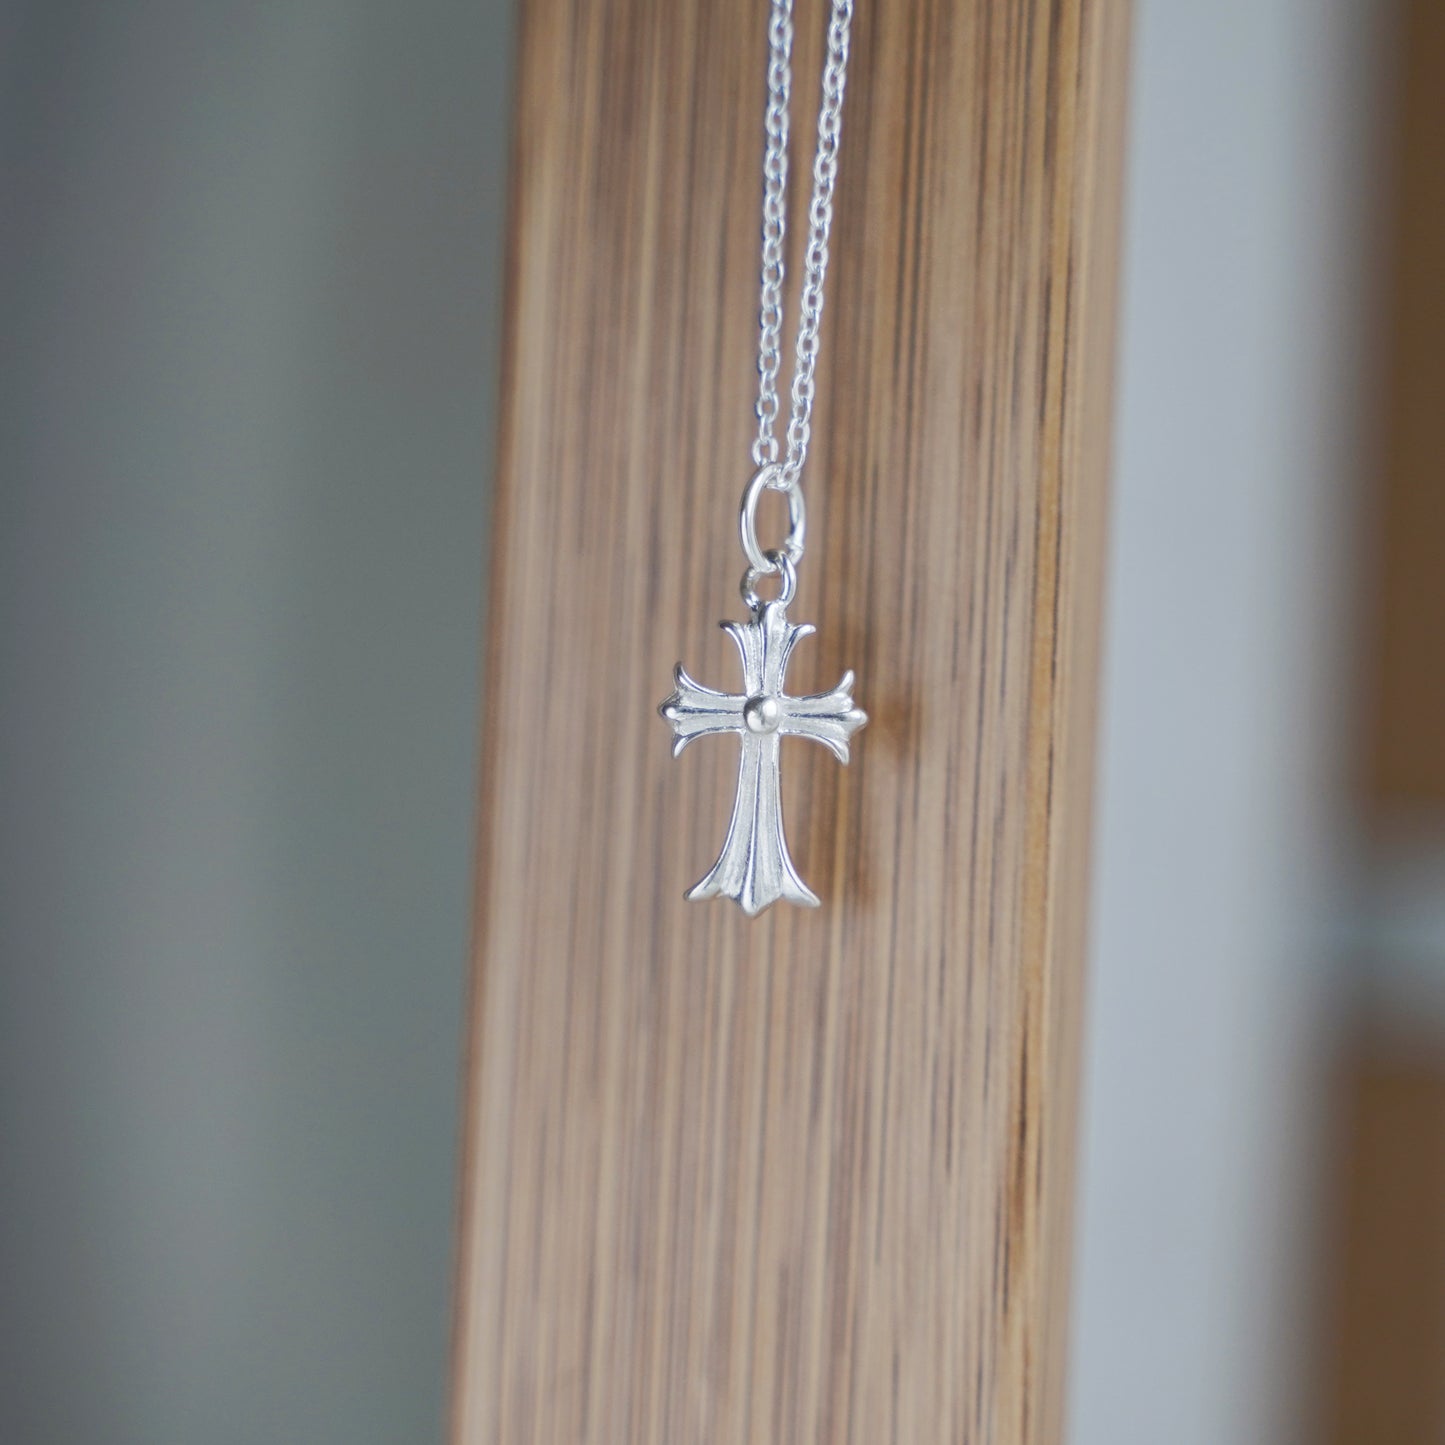 Sterling Silver Cross Pendant with Fleur De Lis Design (15mm x 10mm) - sugarkittenlondon